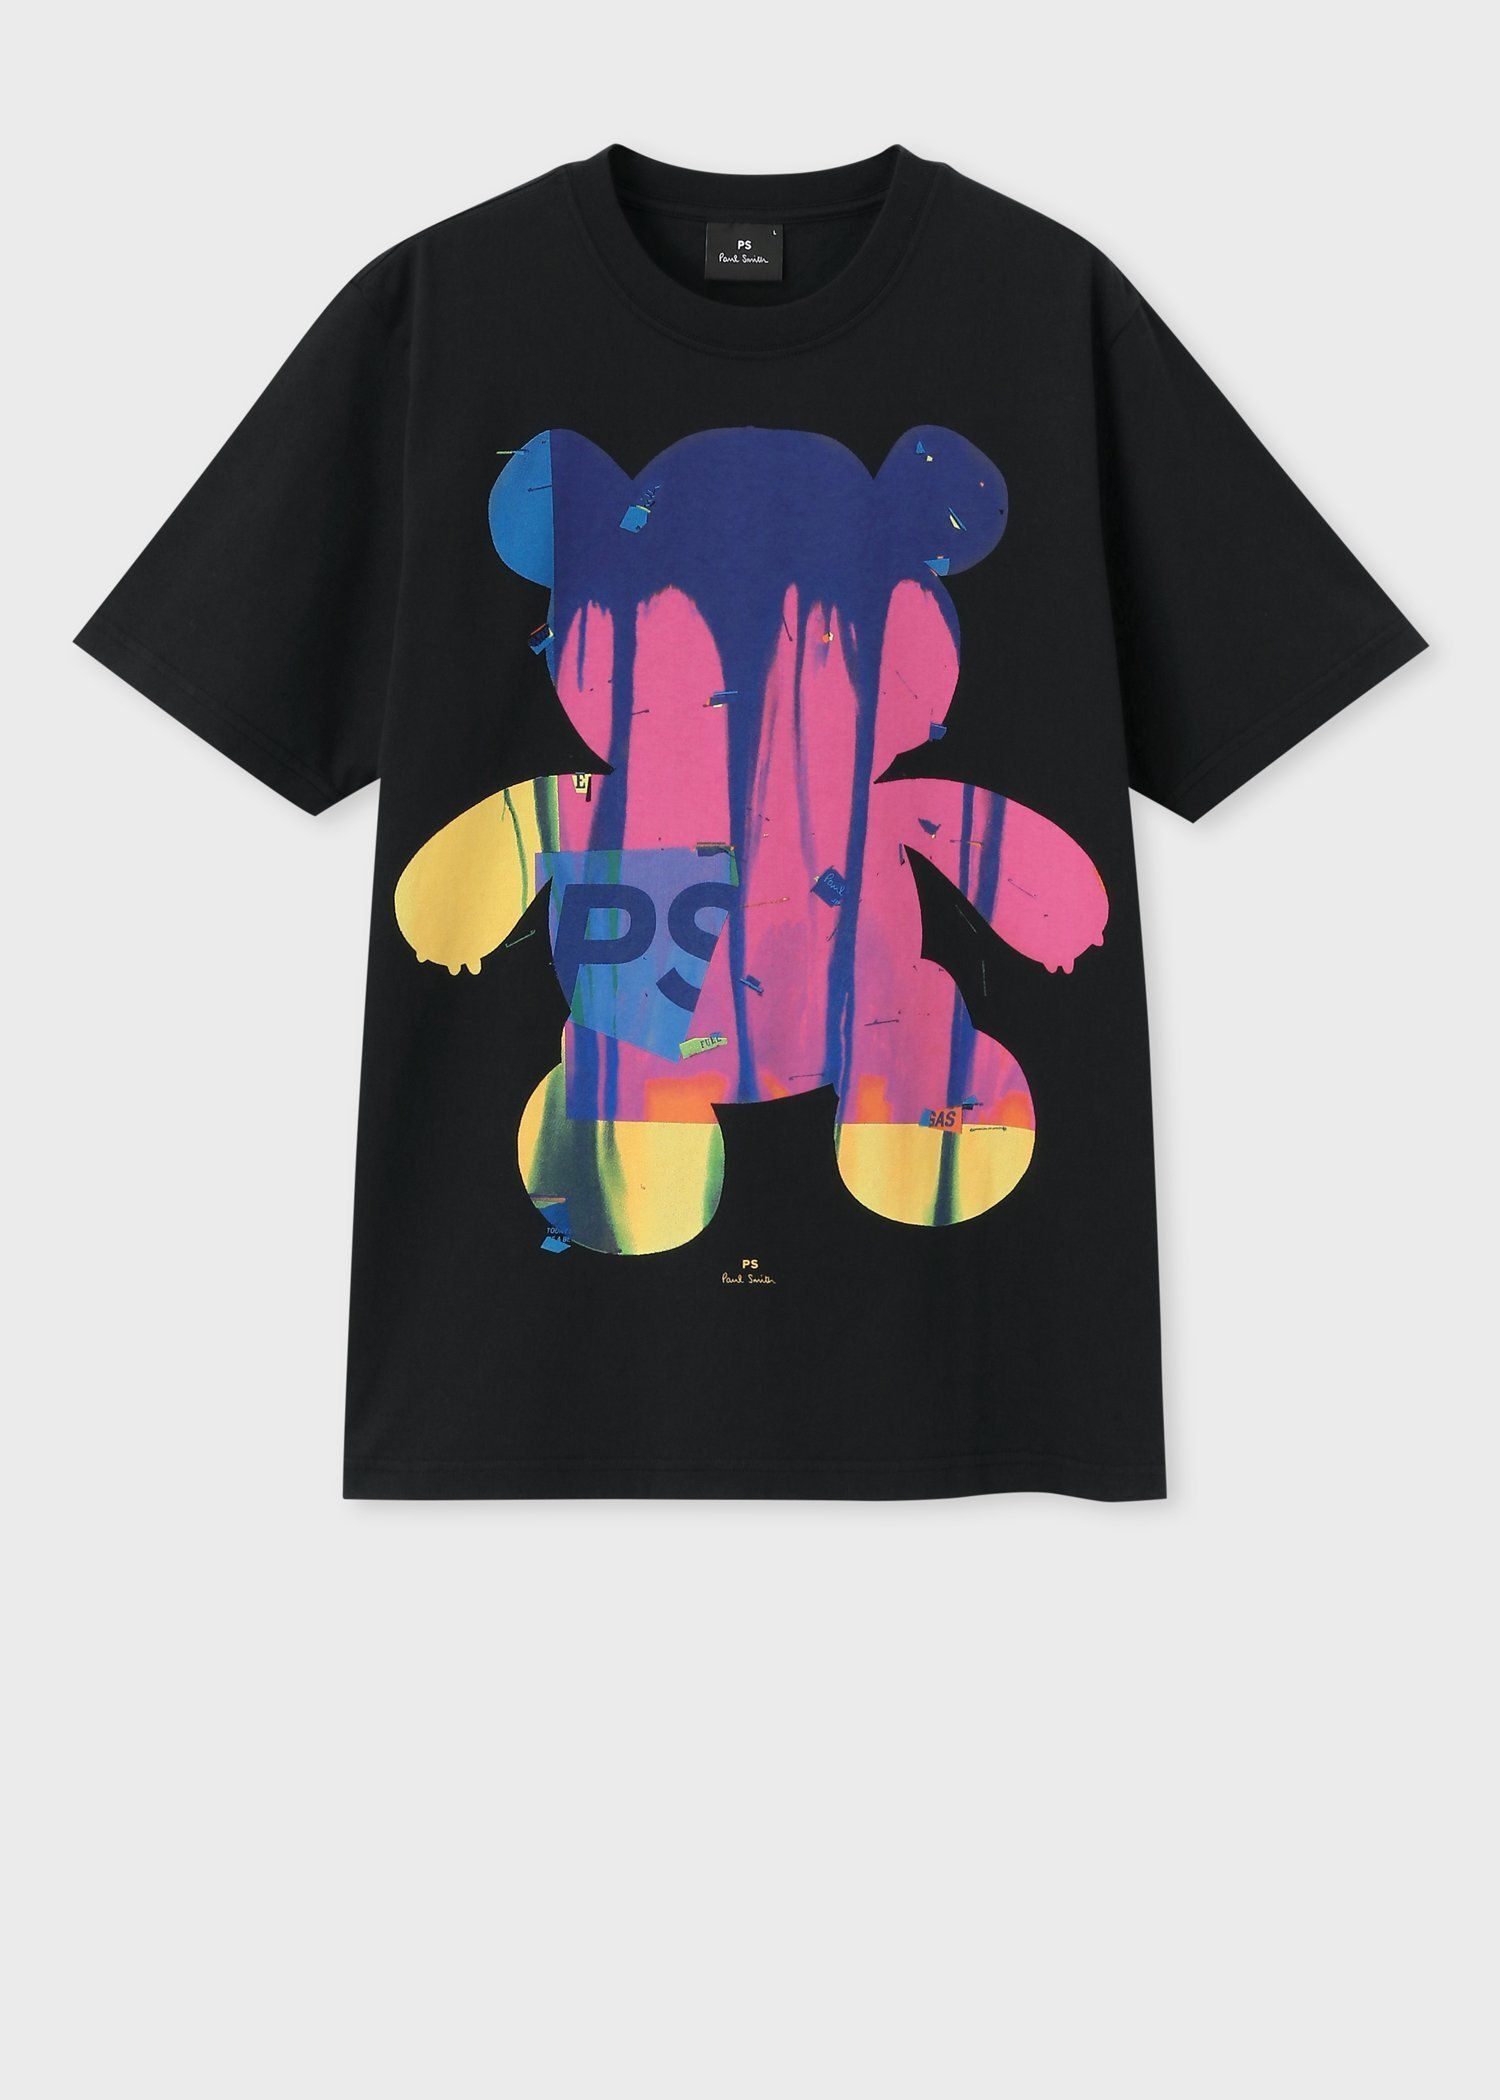 "Painted Bear" Tシャツ